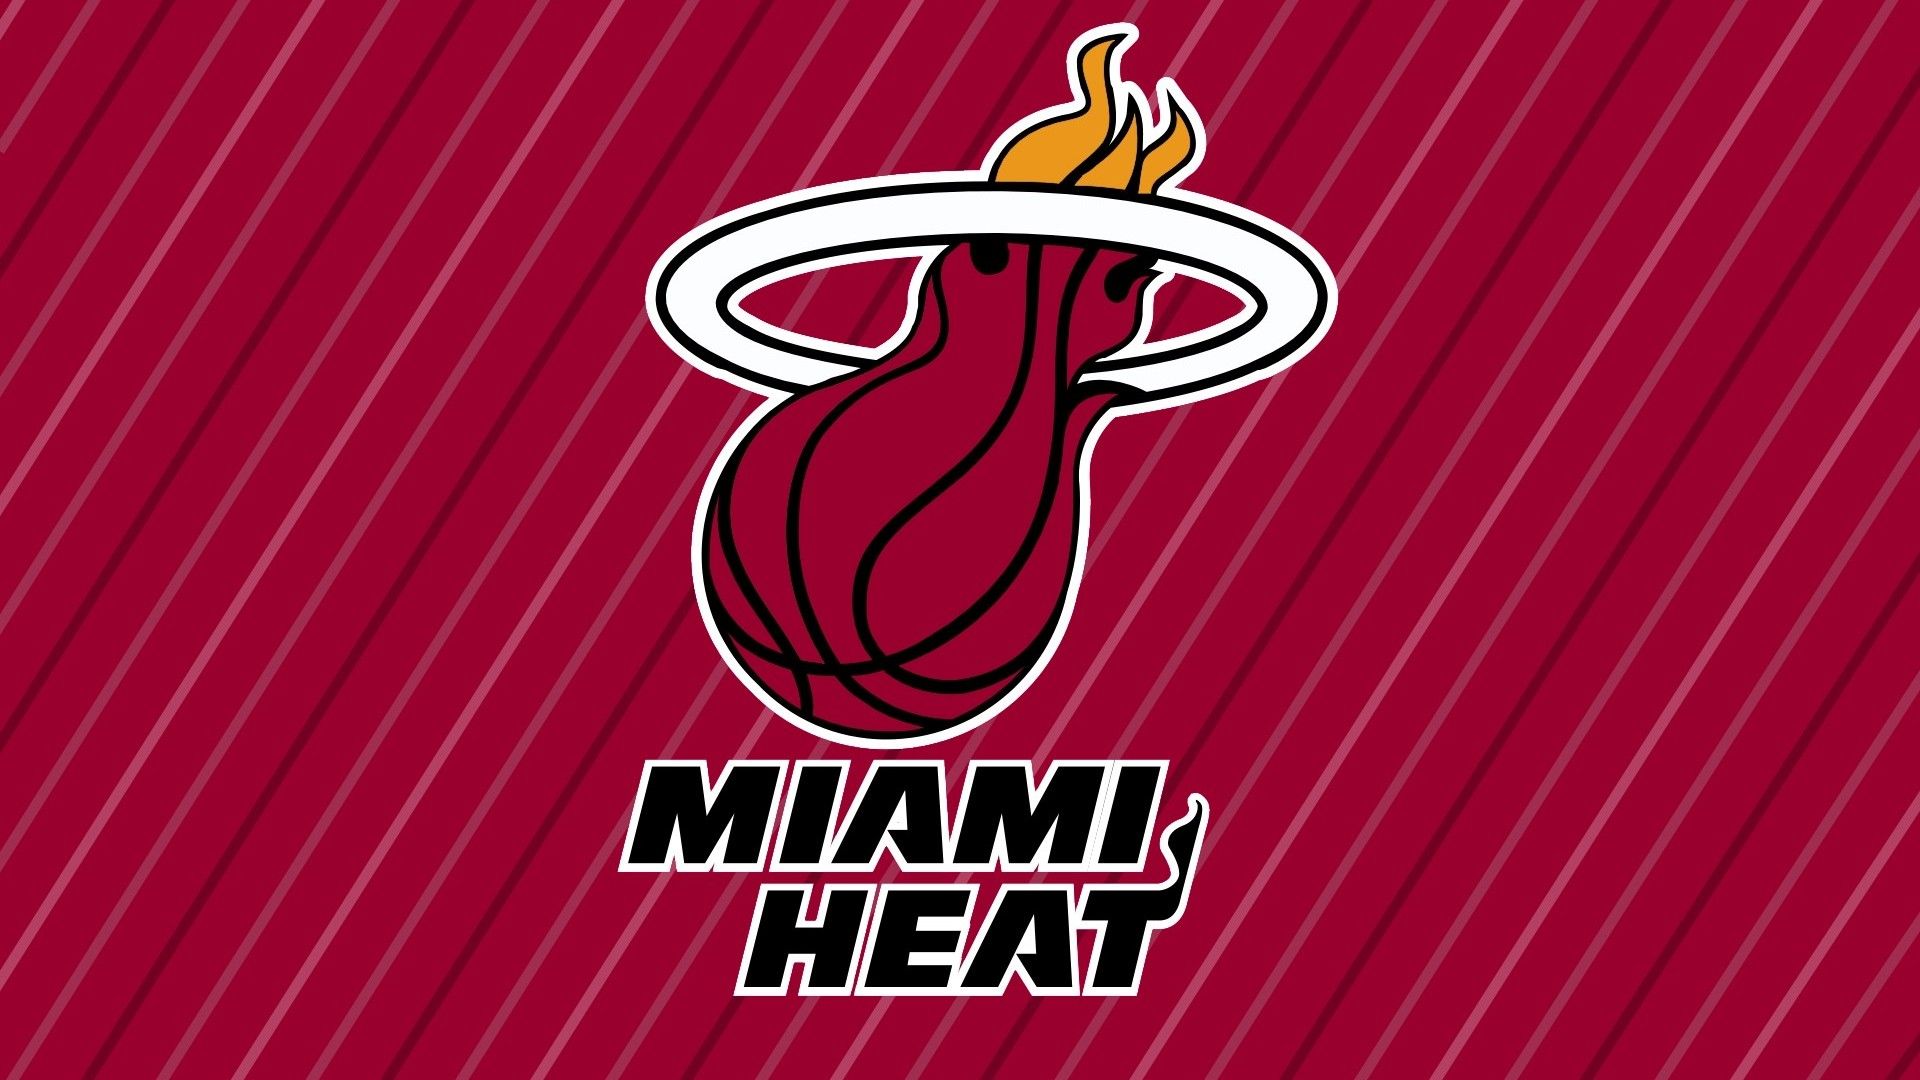 Wallpaper HD Miami Heat Basketball Wallpaper. Miami heat, Miami heat logo, Miami